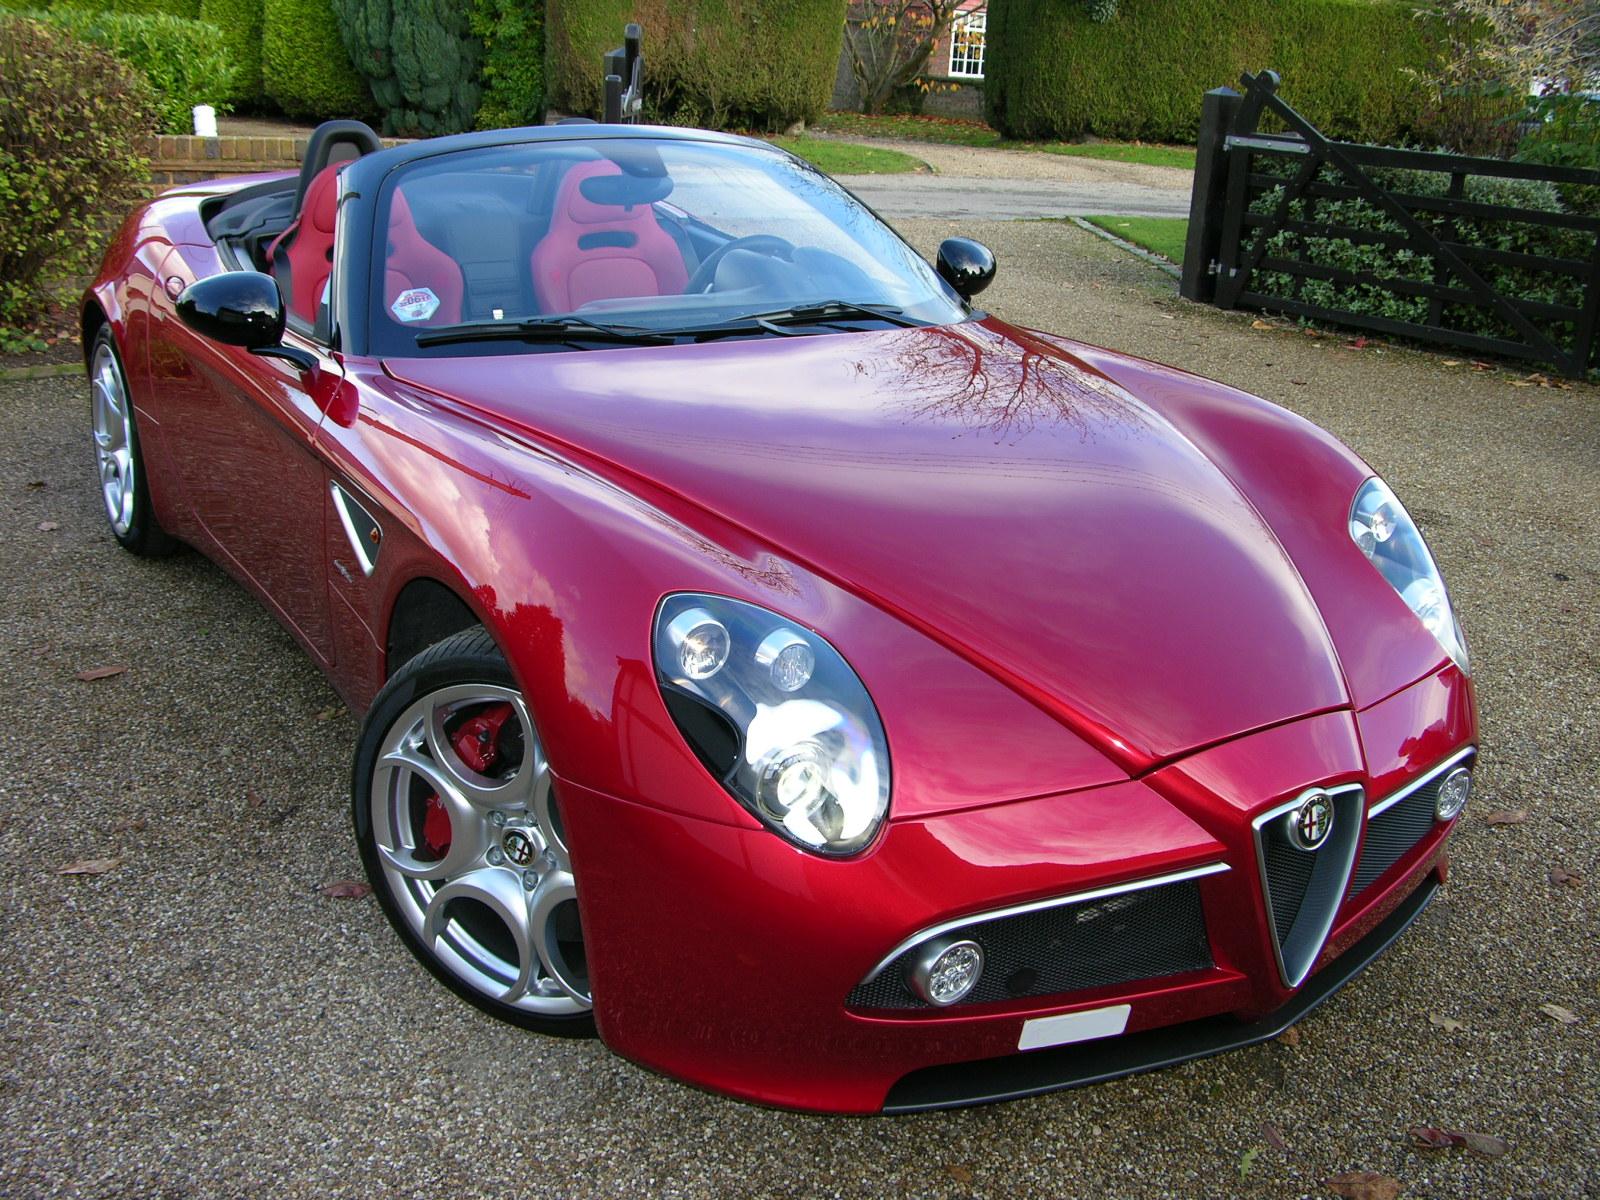 Alfa Romeo 8C Spider Backgrounds, Compatible - PC, Mobile, Gadgets| 1600x1200 px